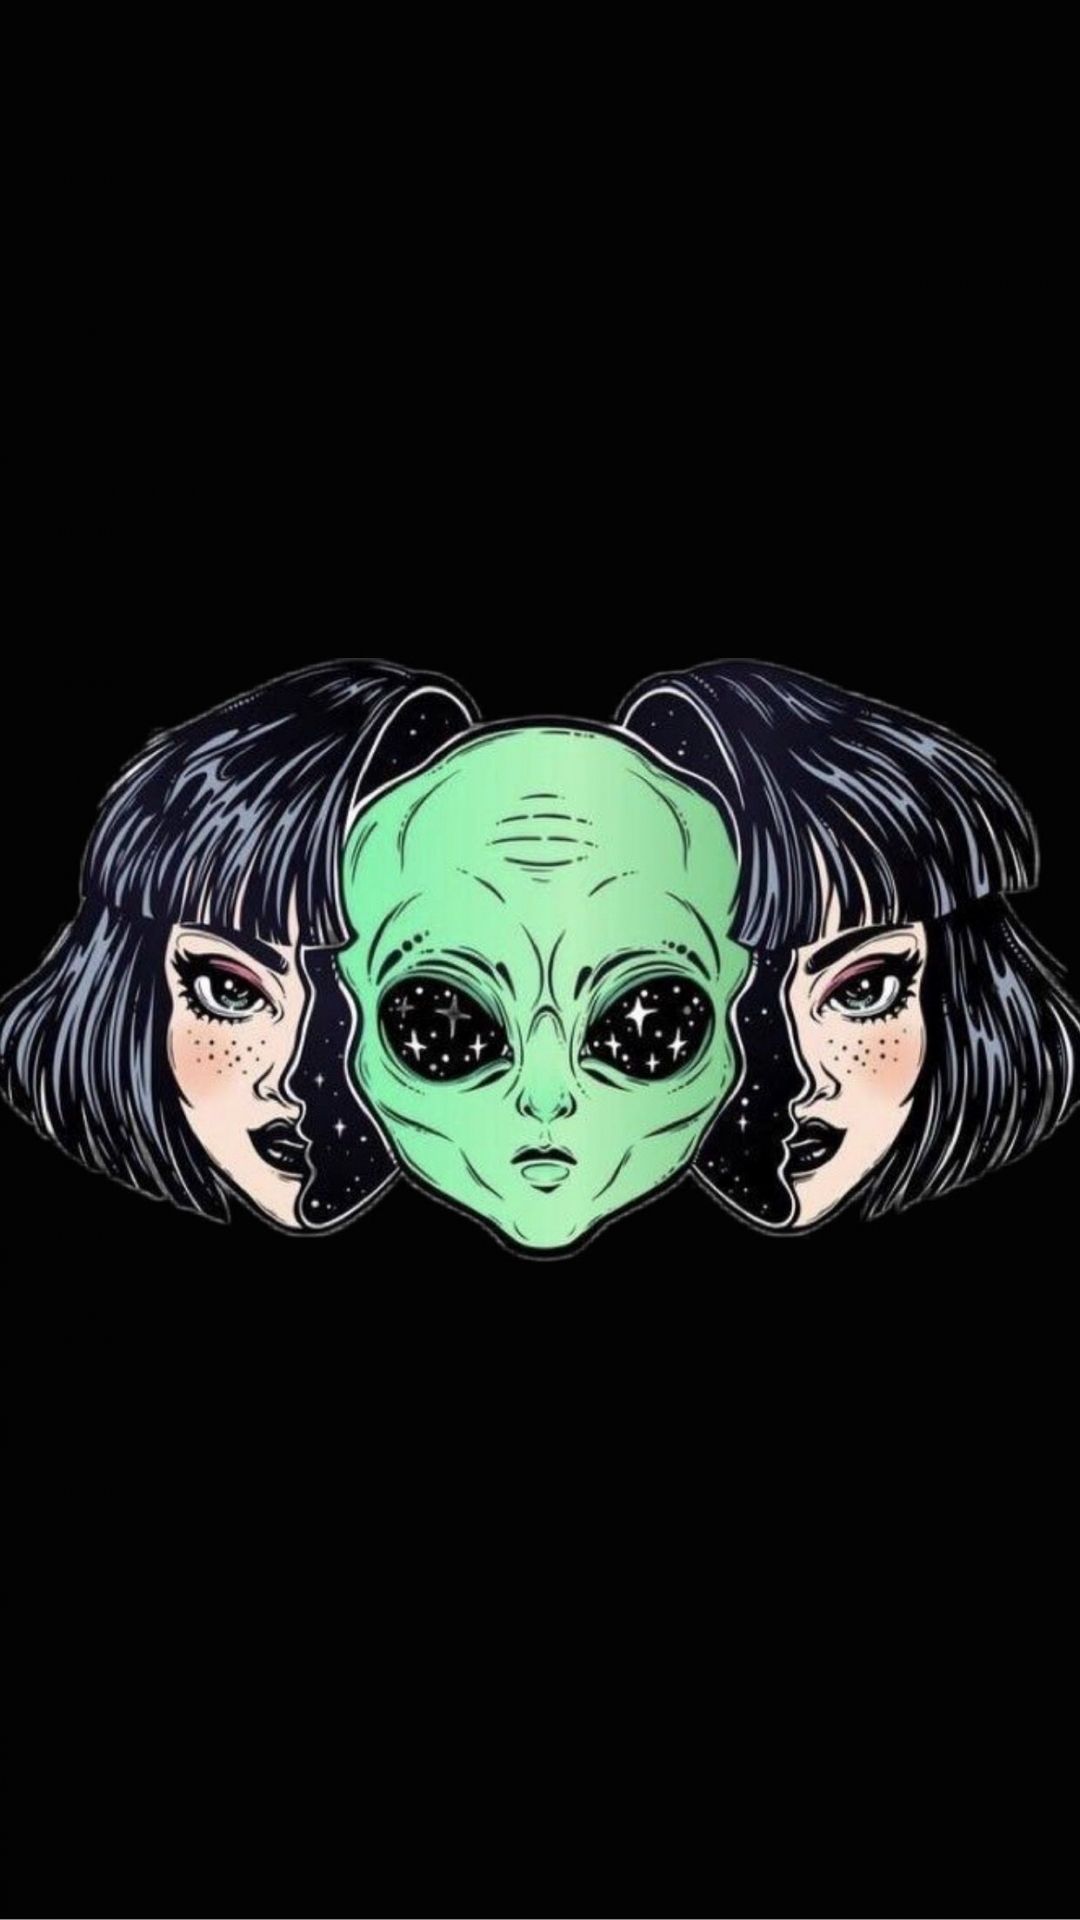 Aesthetic Cute Alien Wallpaper Android Download. Alien